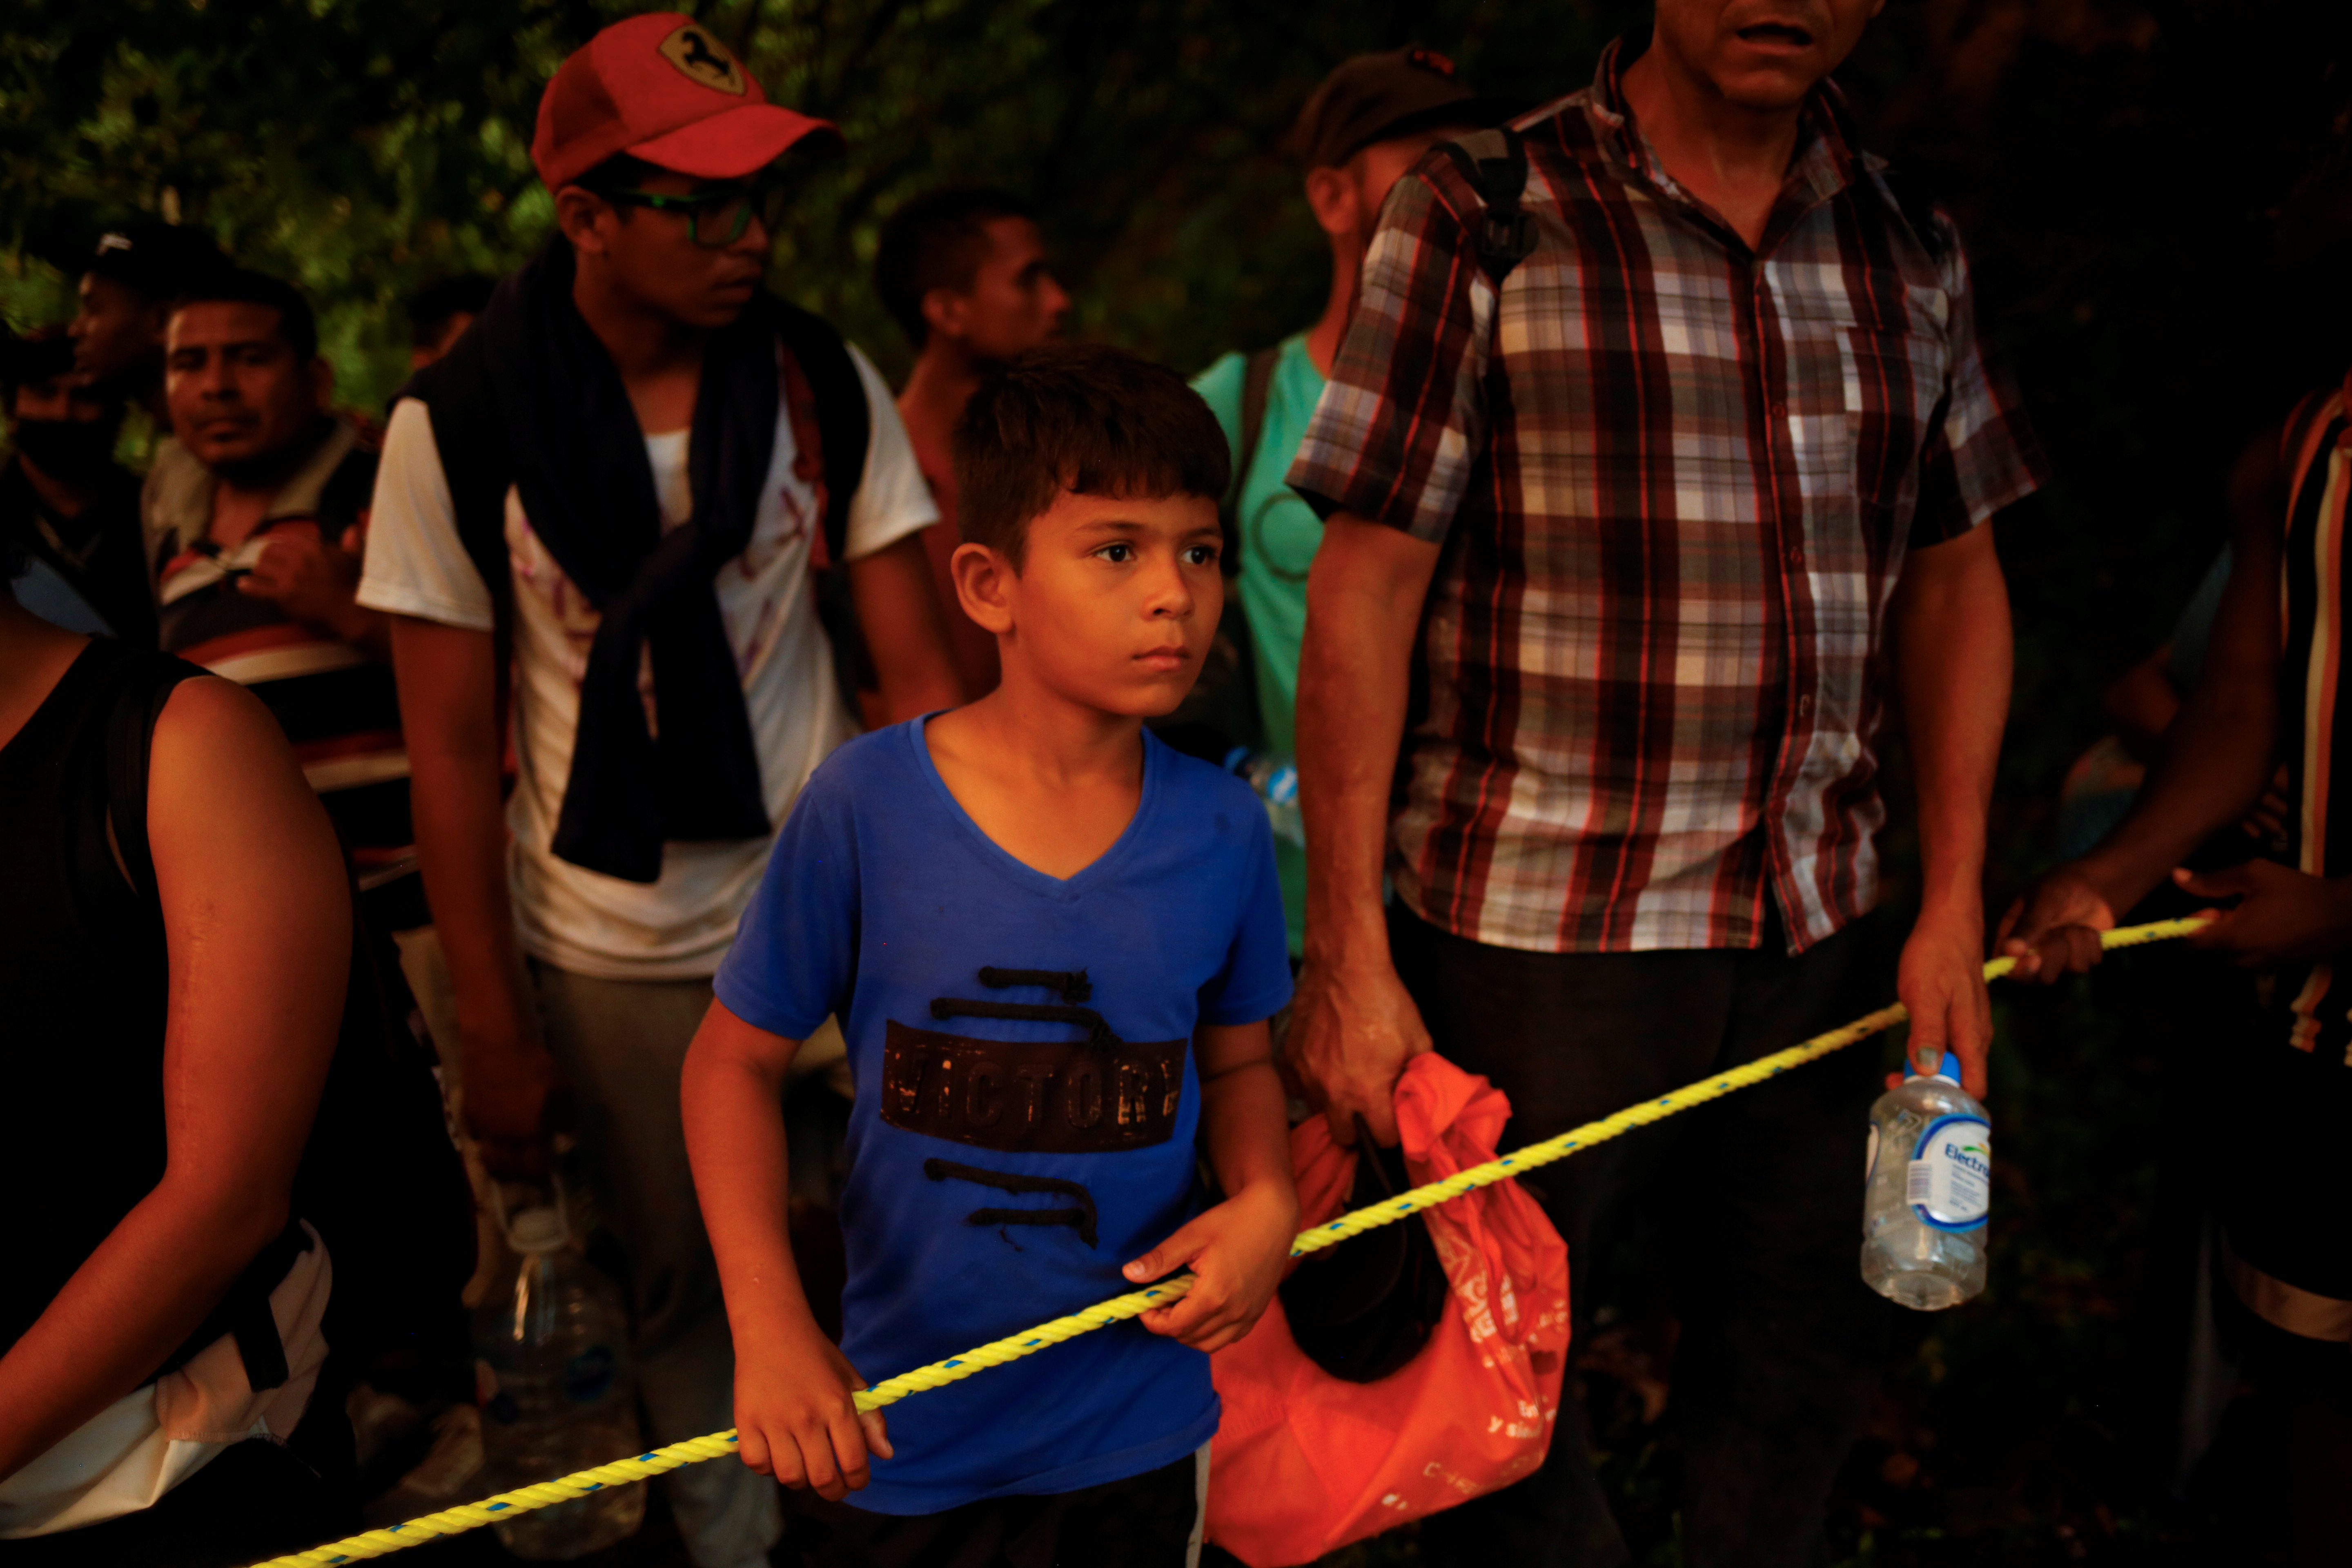 Xabiel, 9, a migrant from Venezuela traveling with his brother joins the caravan heading to the U.S. border, near Villa Comaltitlan, Mexico November 20, 2021. REUTERS/Jose Luis Gonzalez